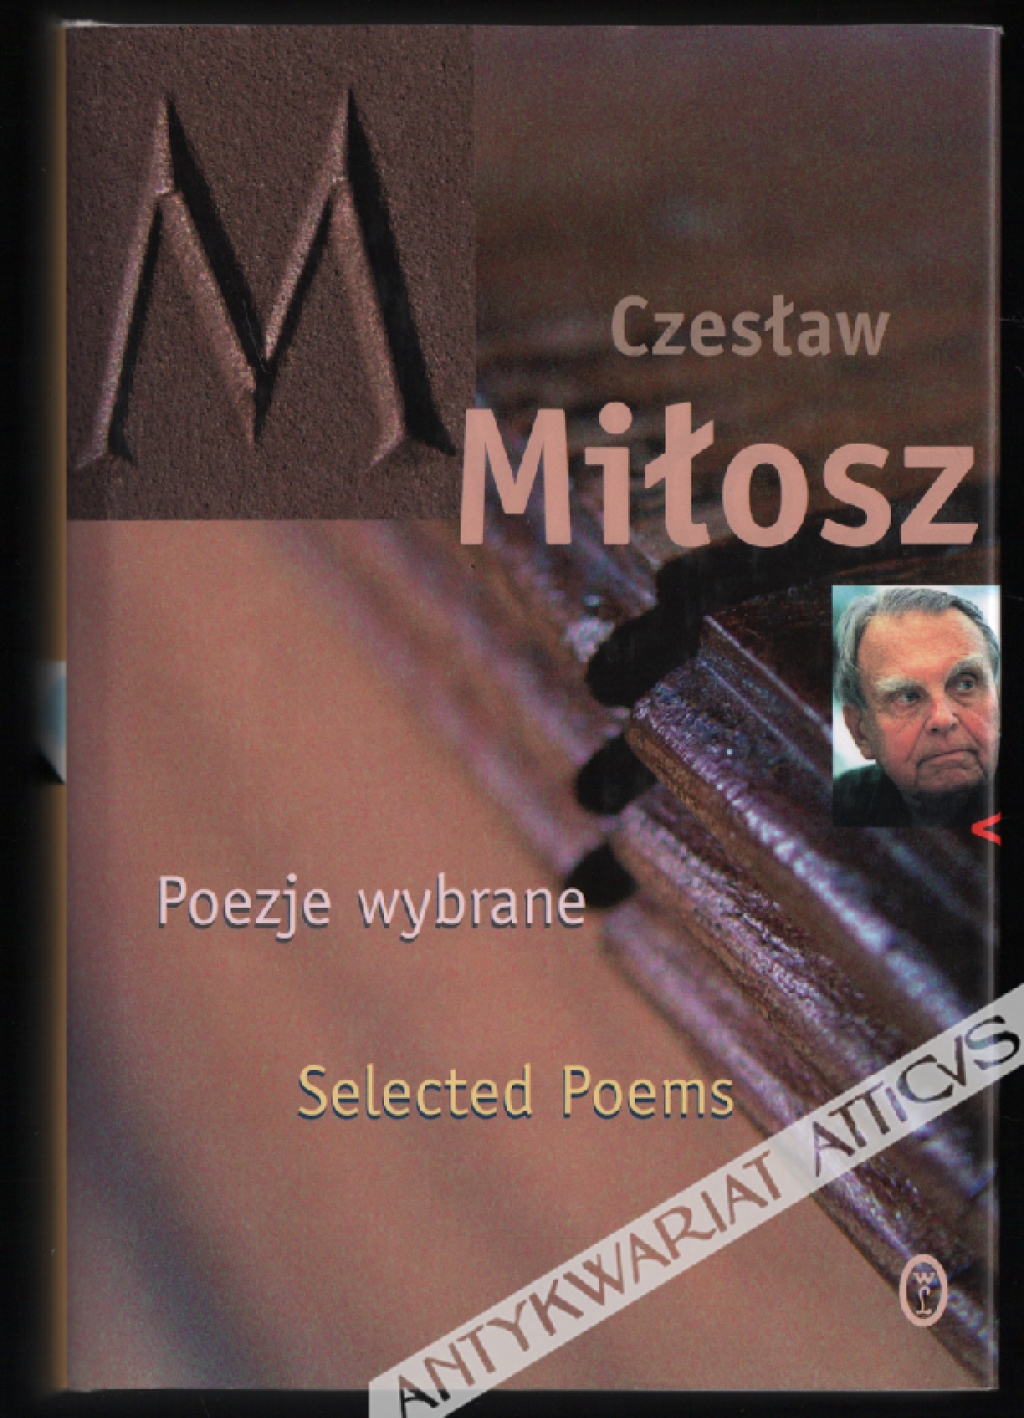 Poezje wybrane - Selected Poems